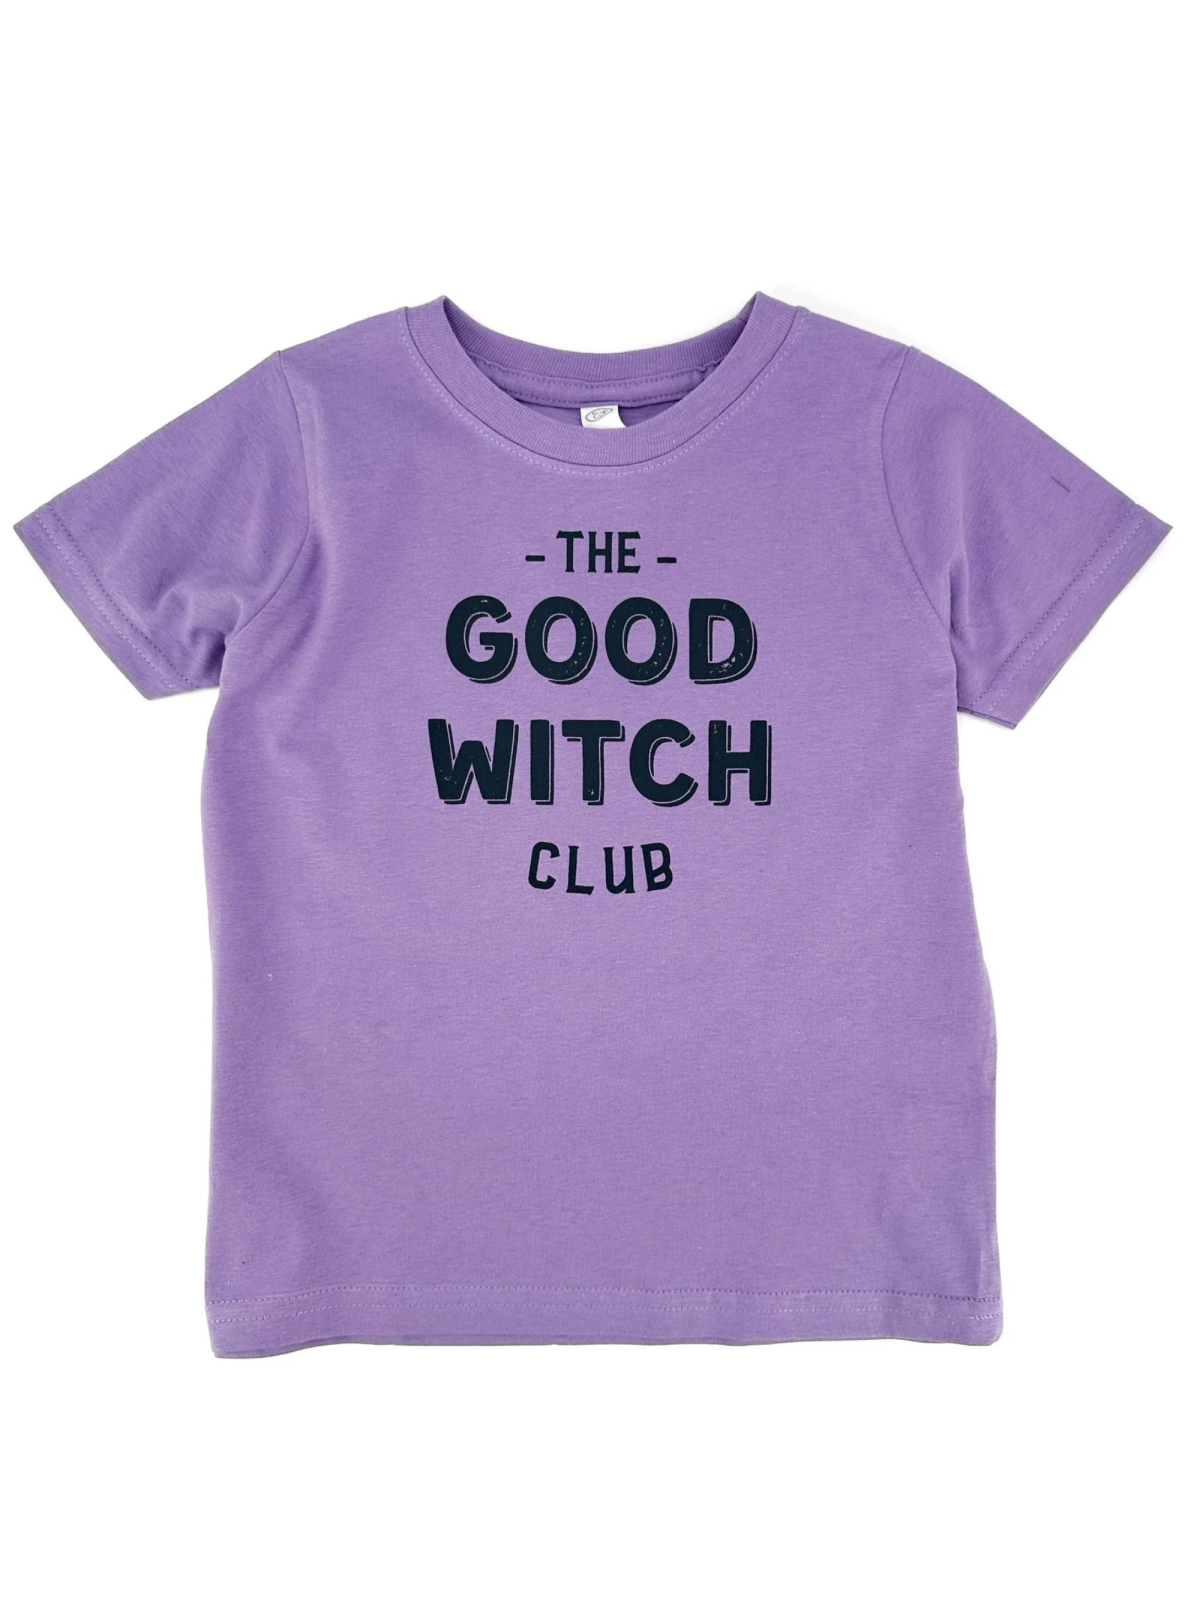 The Good Witch Club Kids Tee, Purple